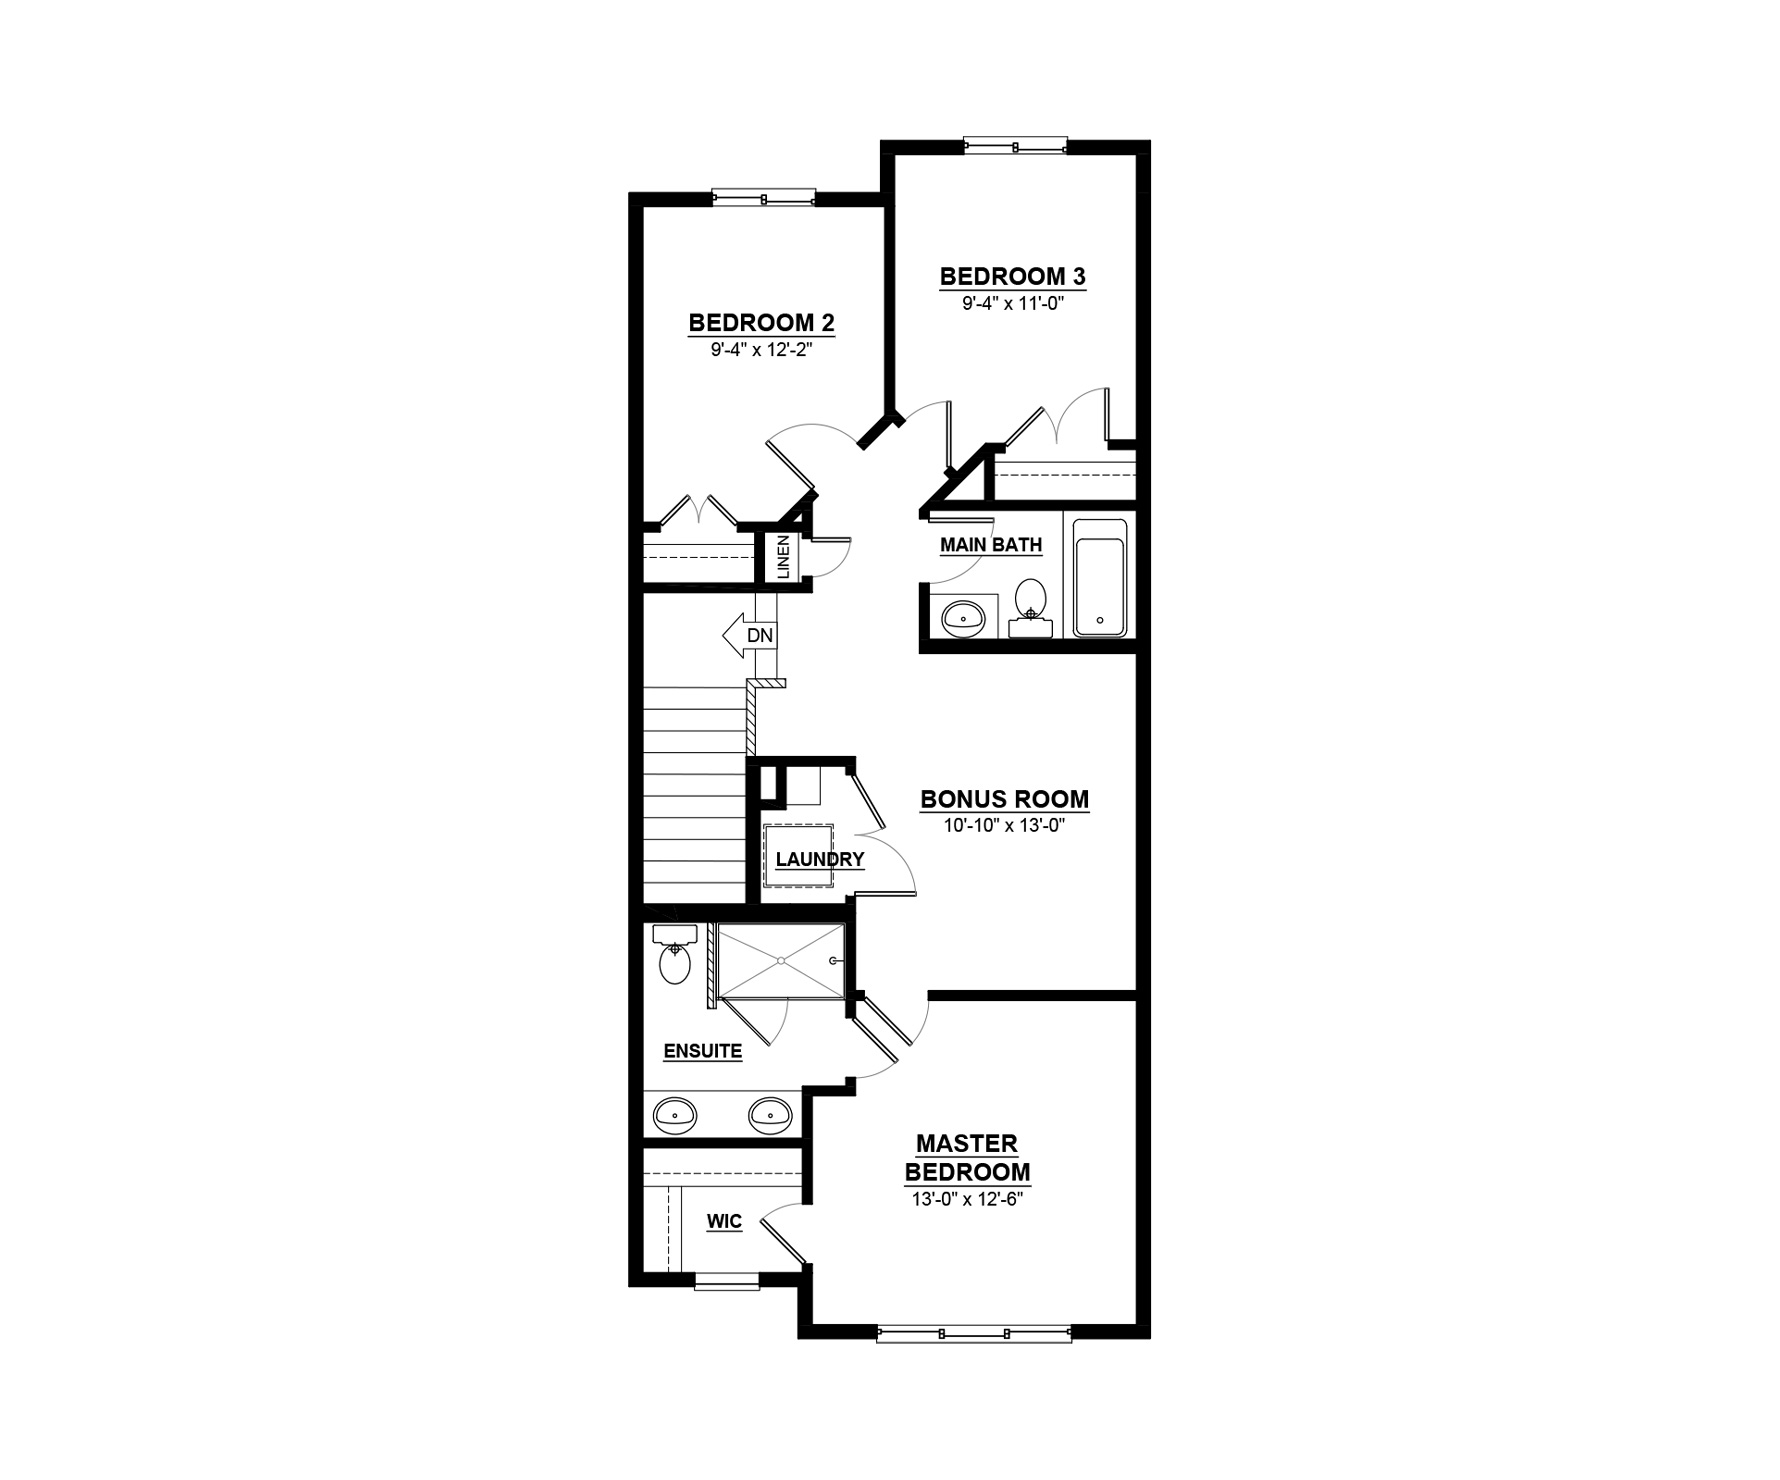 CARRERA-Z Floor Plan of Crystallina Nera Daytona Homes with undefined beds